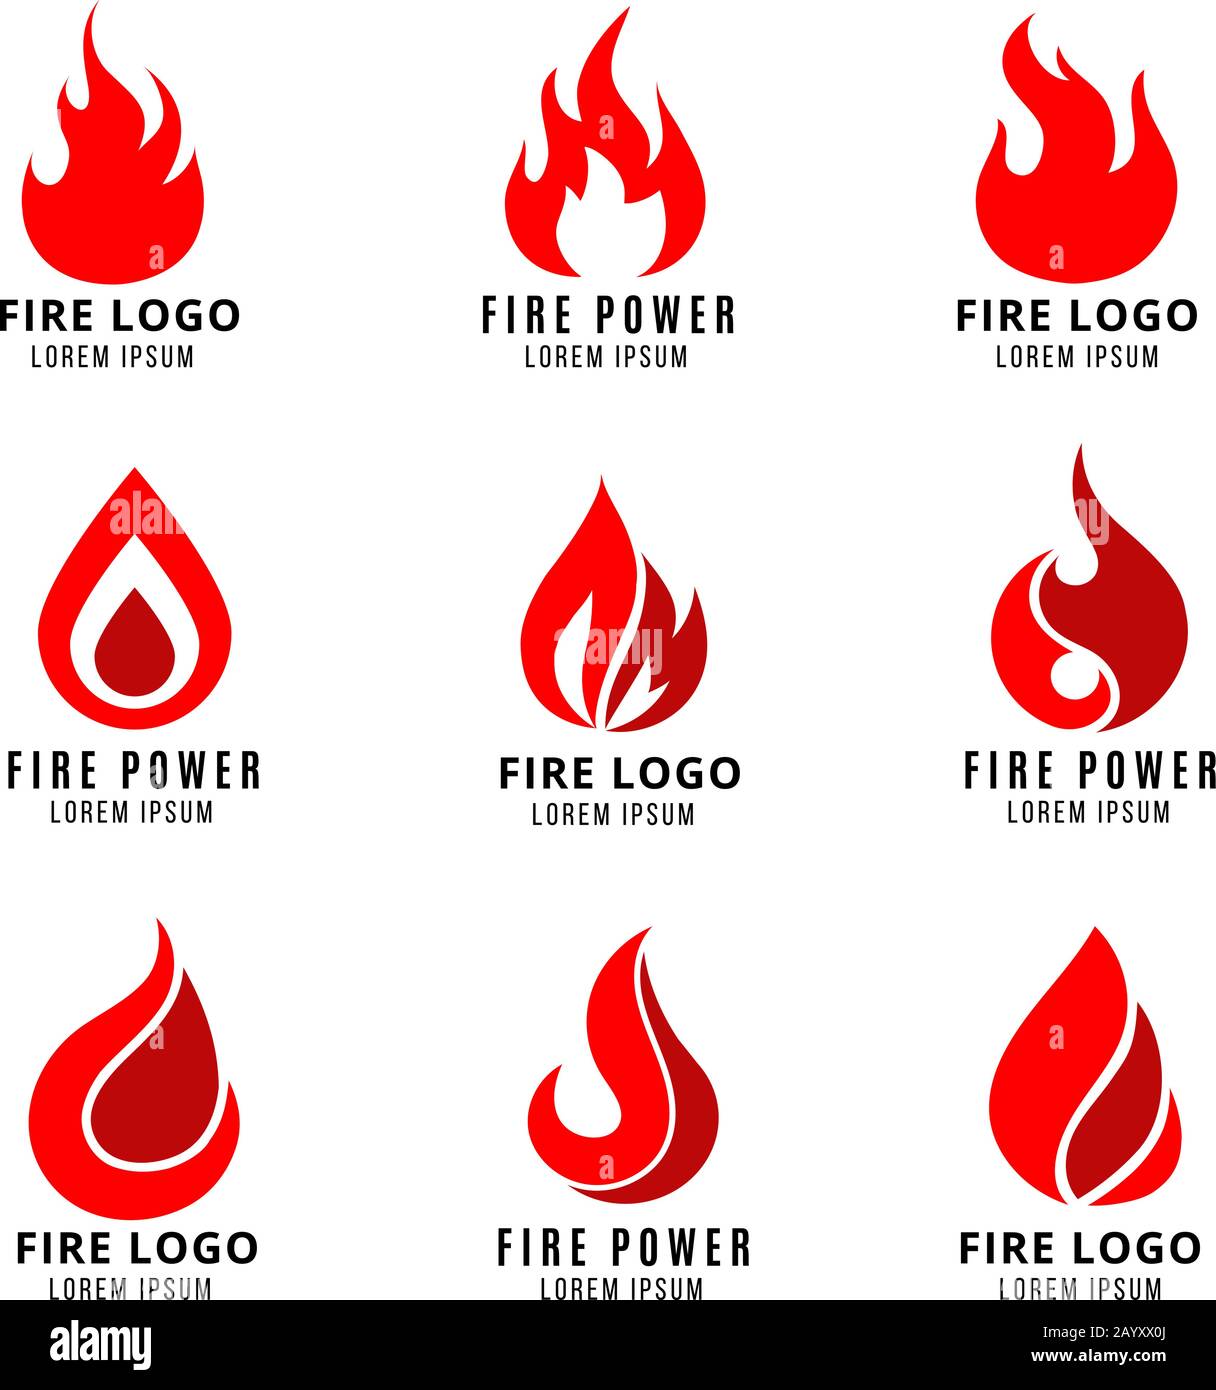 Vektorlogo mit Feuervektor-Symbolen. Abbildung mit dem Brandlogo und dem Flammenfeueremblem Stock Vektor